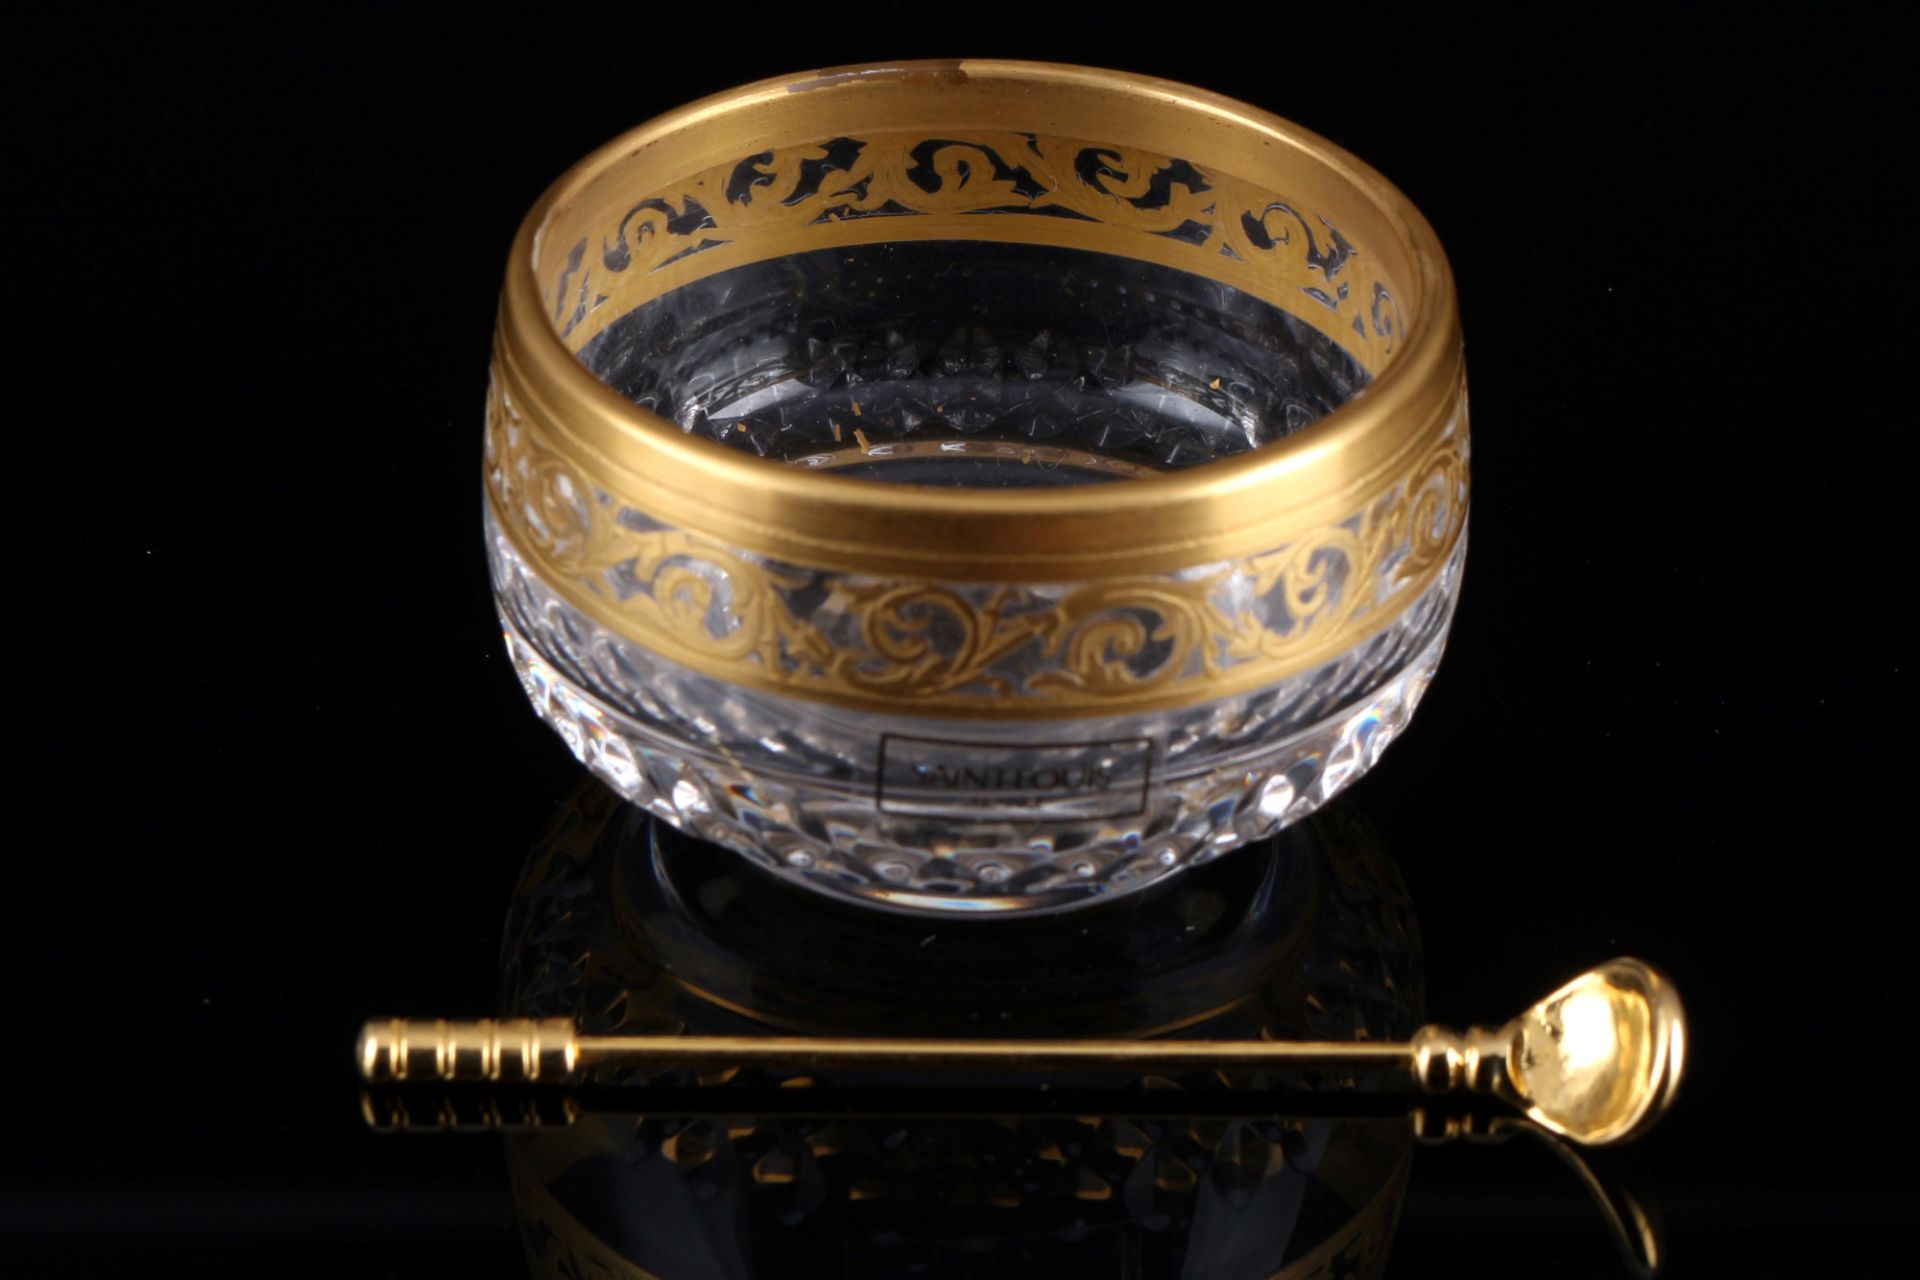 St. Louis Thistle Gold spice bowl, Saliere / Gewürzschale, - Image 2 of 4